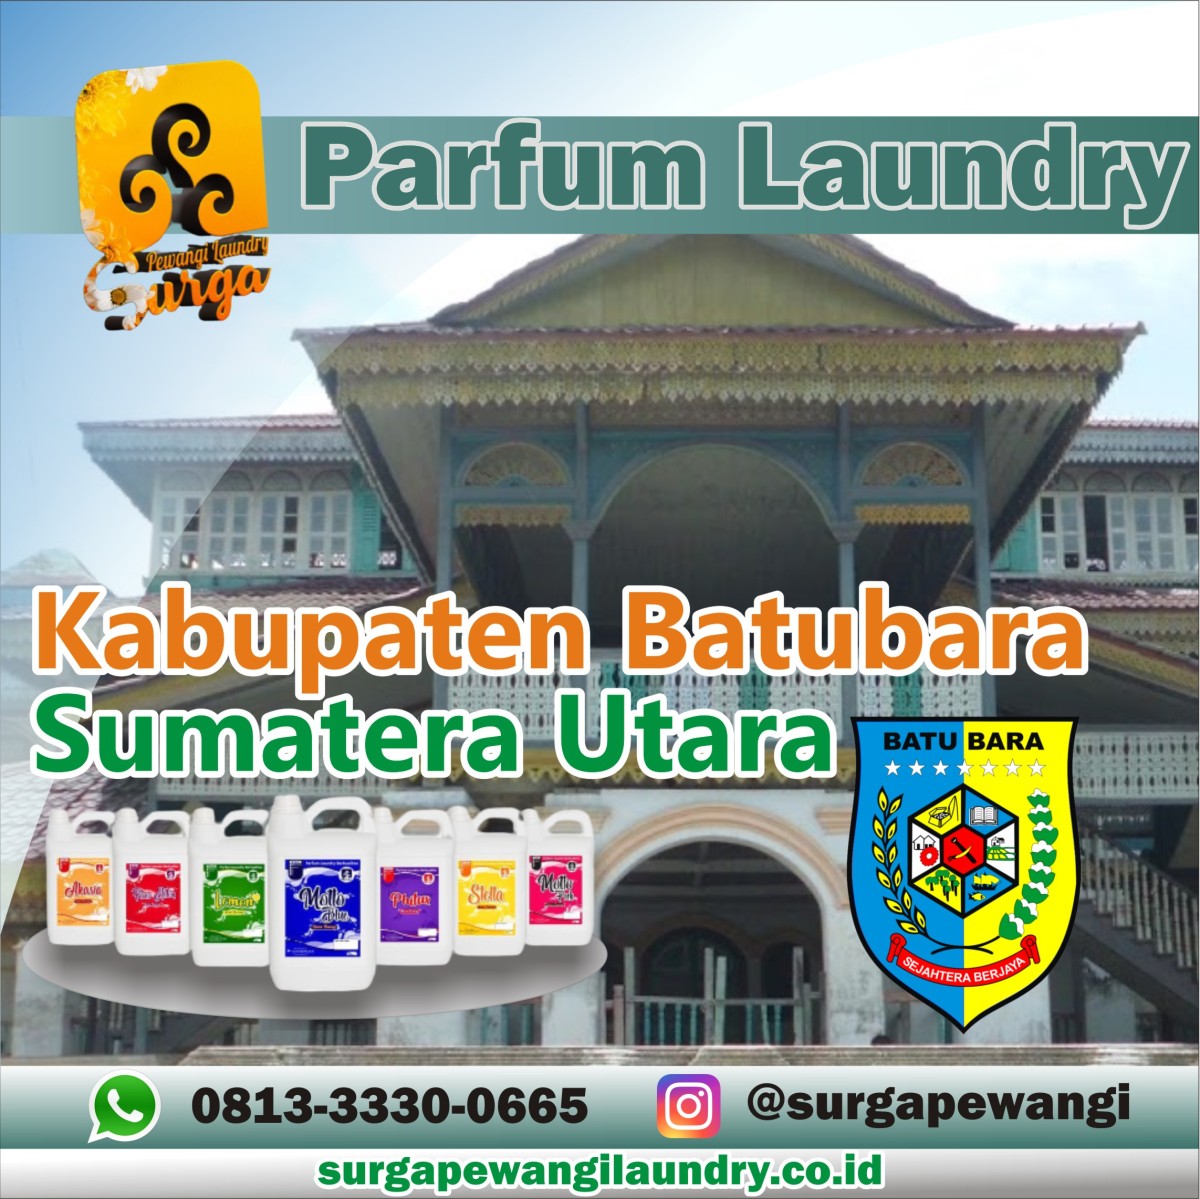 Parfum Laundry Kabupaten Batubara, Sumatera Utara